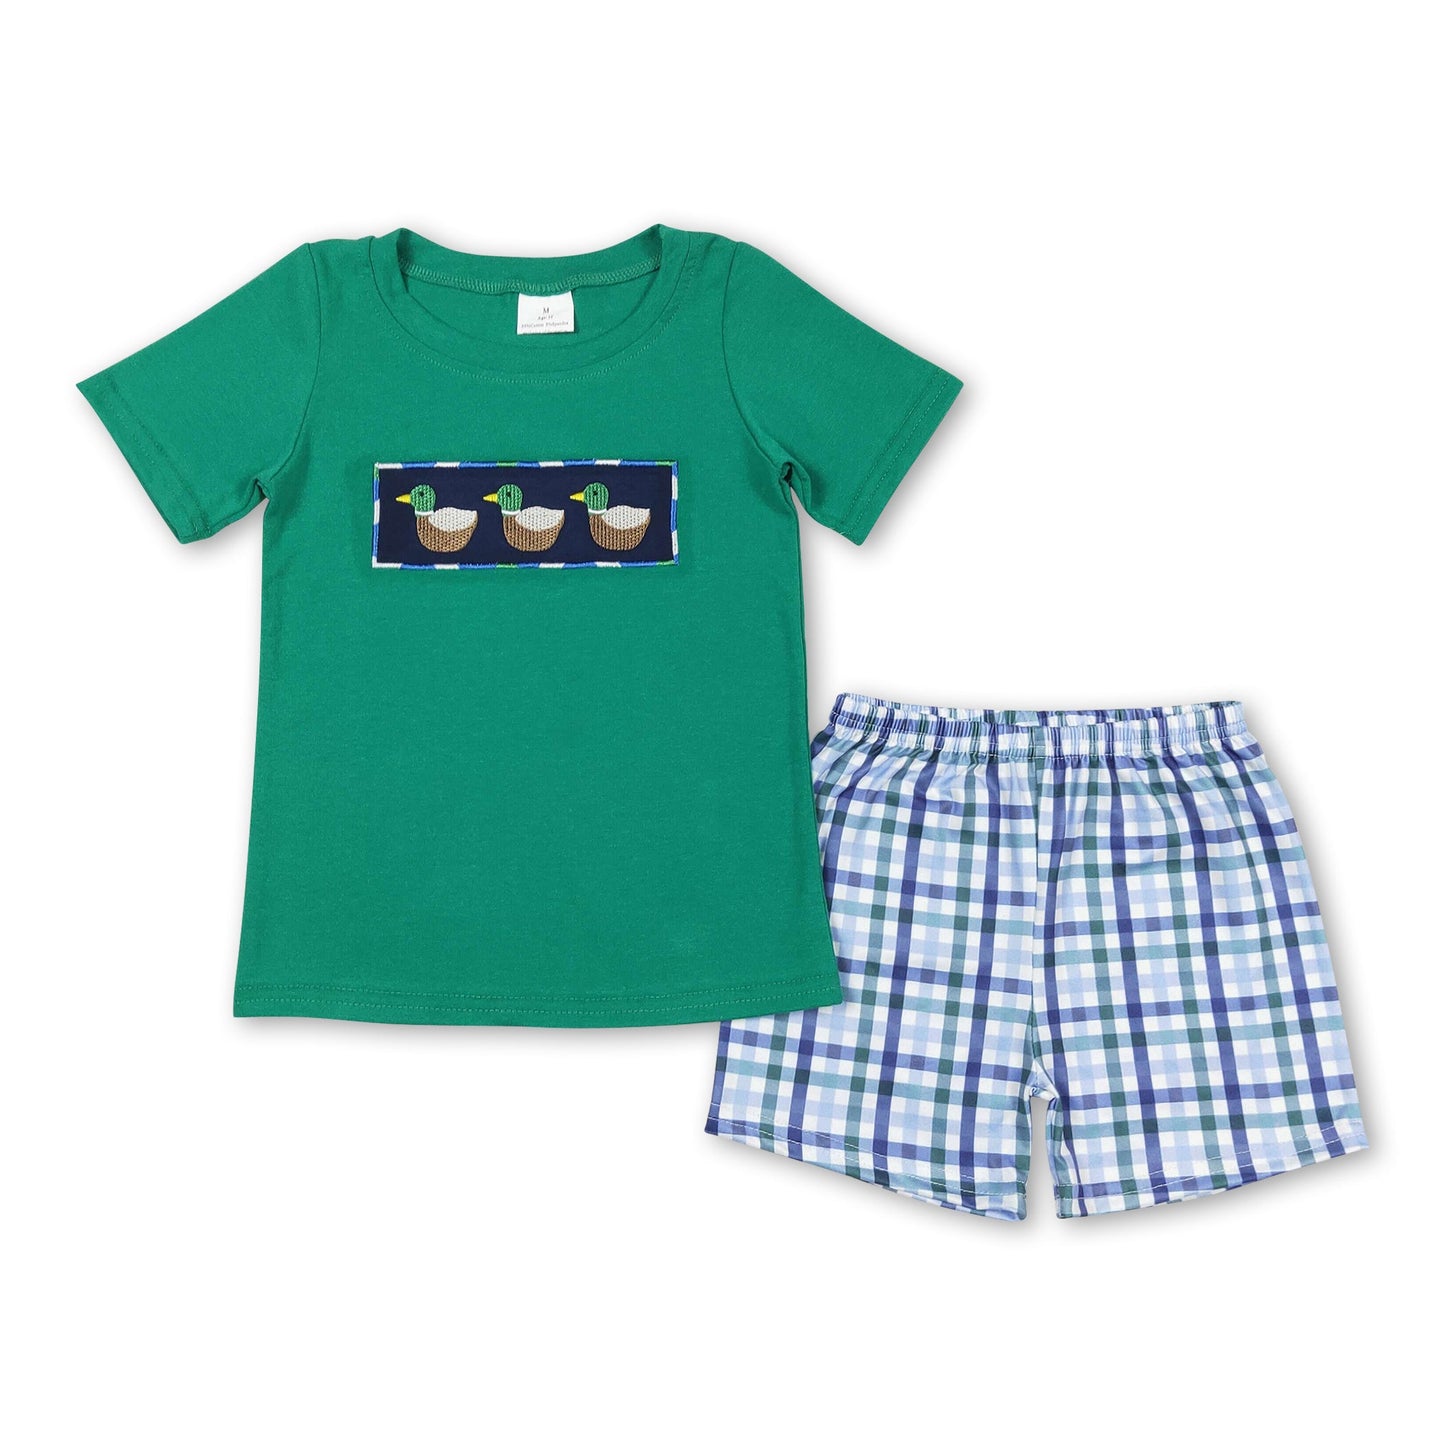 Green duck top plaid shorts boys clothes